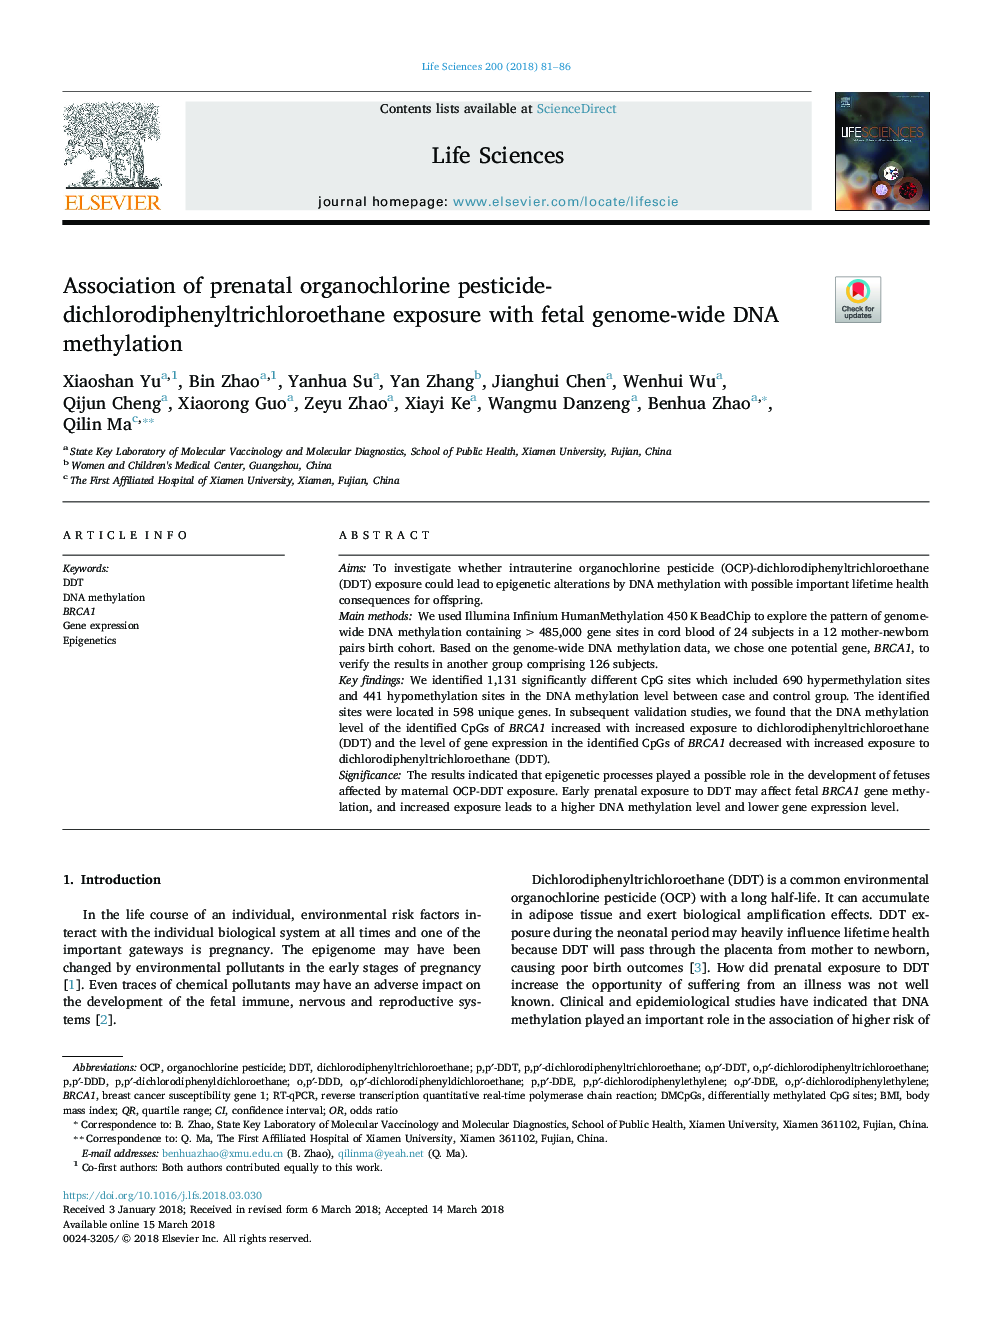 Association of prenatal organochlorine pesticide-dichlorodiphenyltrichloroethane exposure with fetal genome-wide DNA methylation